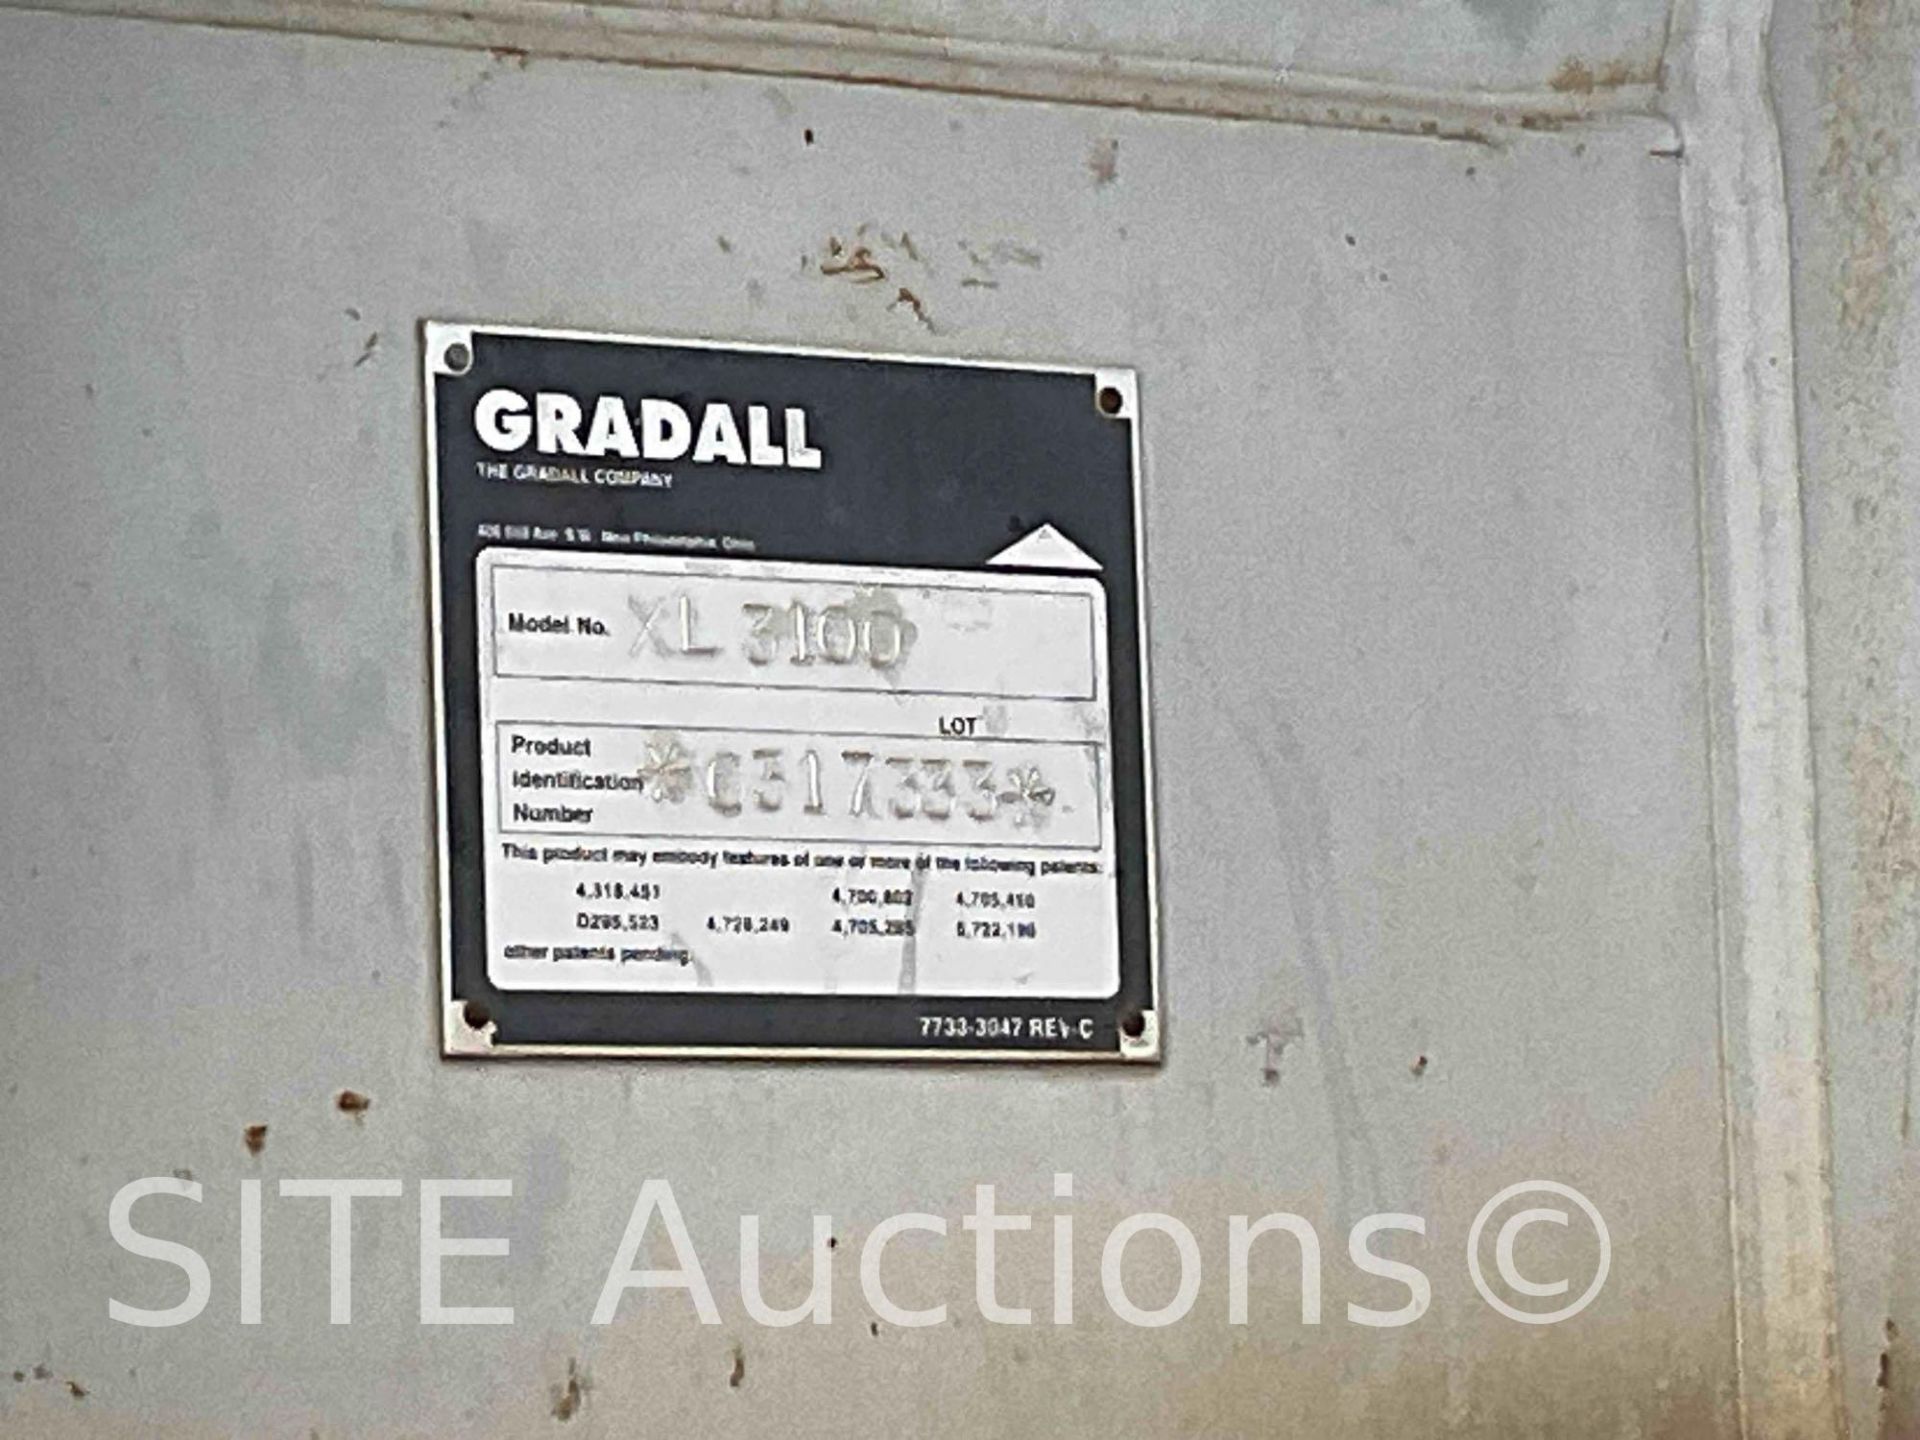 2001 Gradall XL3100 Wheeled Excavator - Image 12 of 40